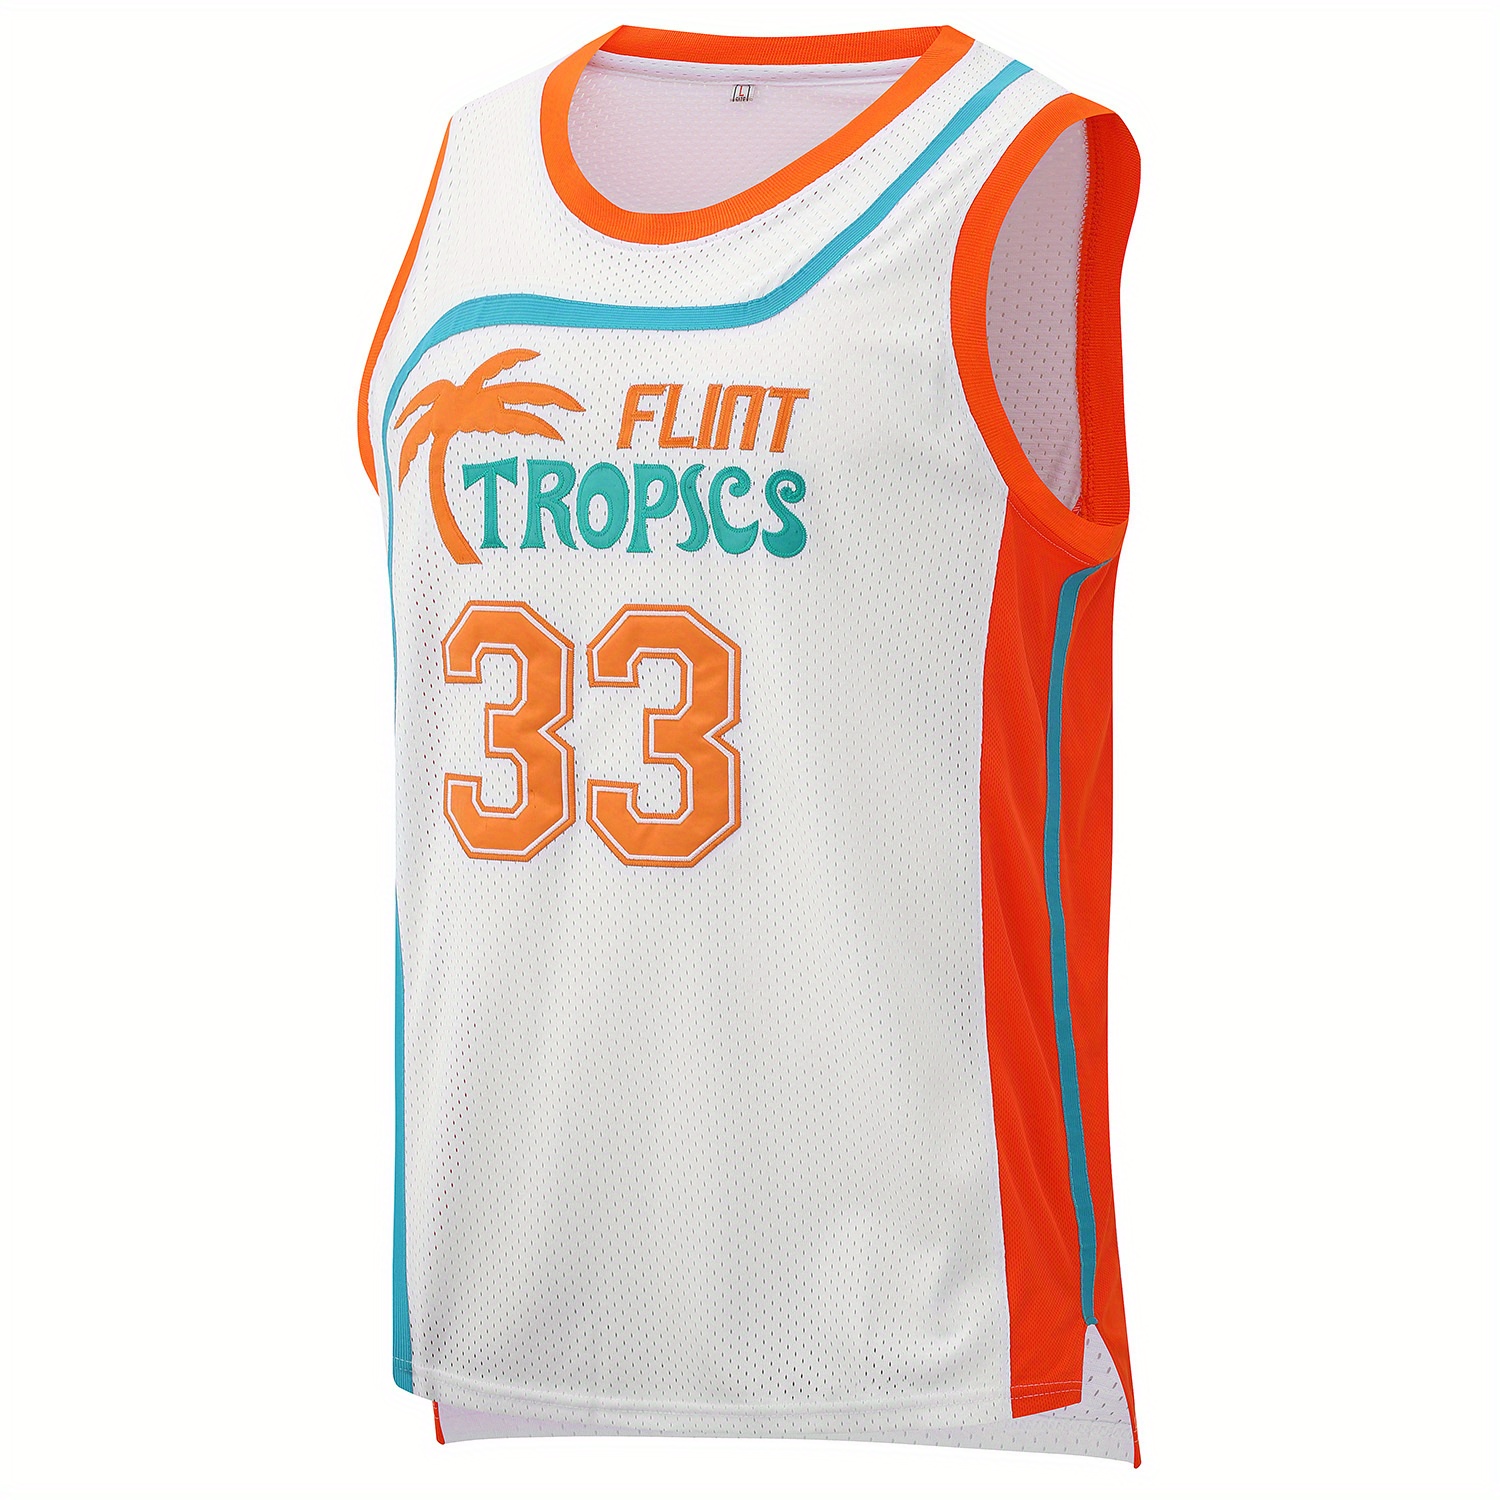 Temu Men's Flint Tropics #33 Basketball Jersey, Mens Vintage Embroidery Breathable Round Neck Sleeveless Uniform Basketball Shirt for Training